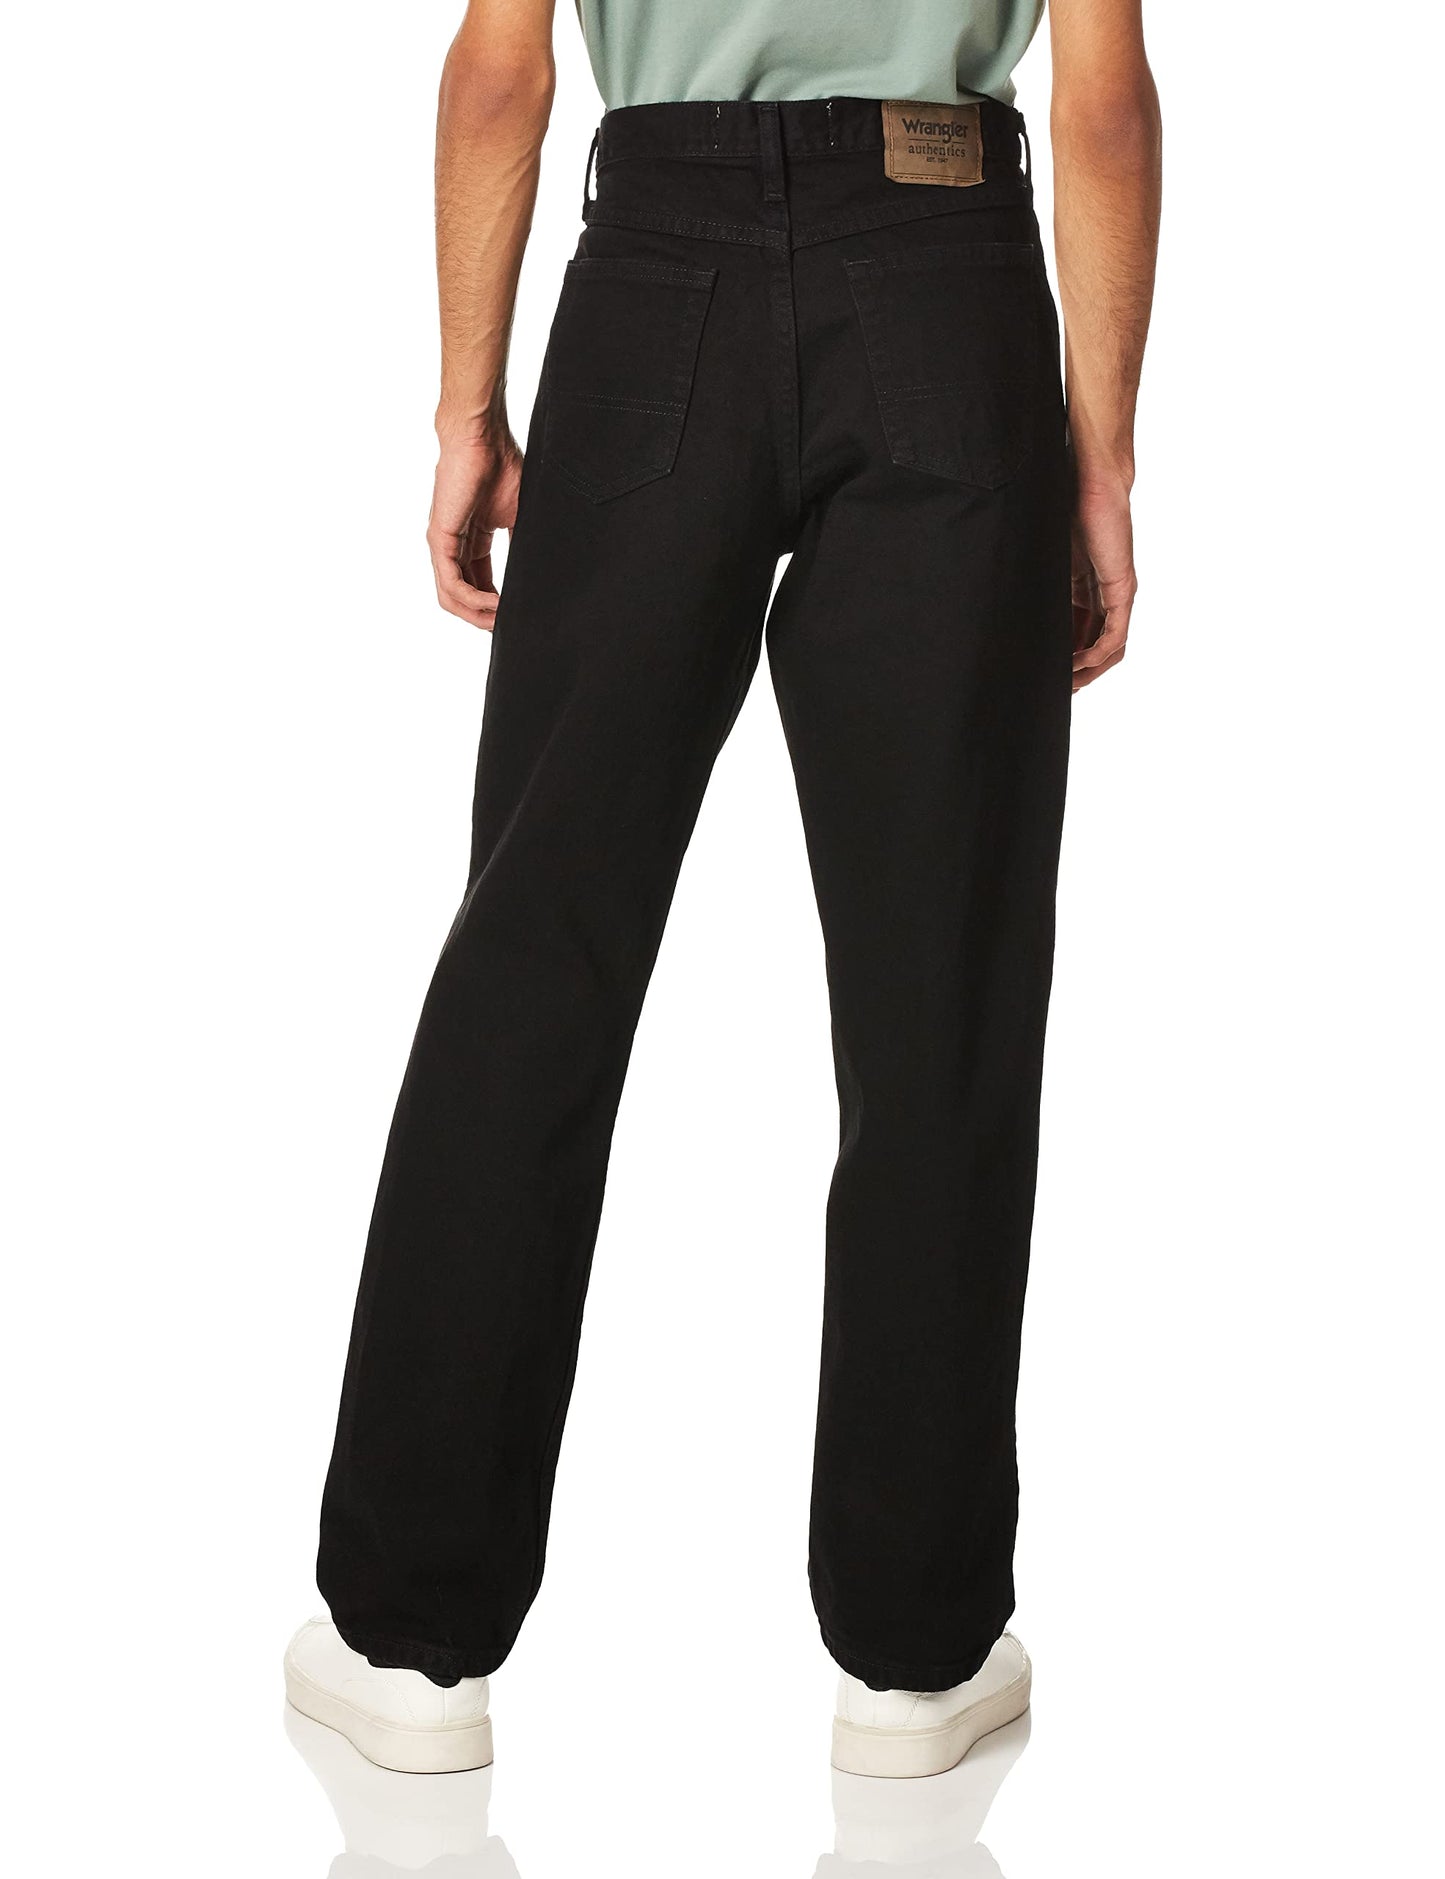 Wrangler Authentics Men's Classic 5-Pocket Relaxed Fit Cotton Jean, Black, 34W x 34L